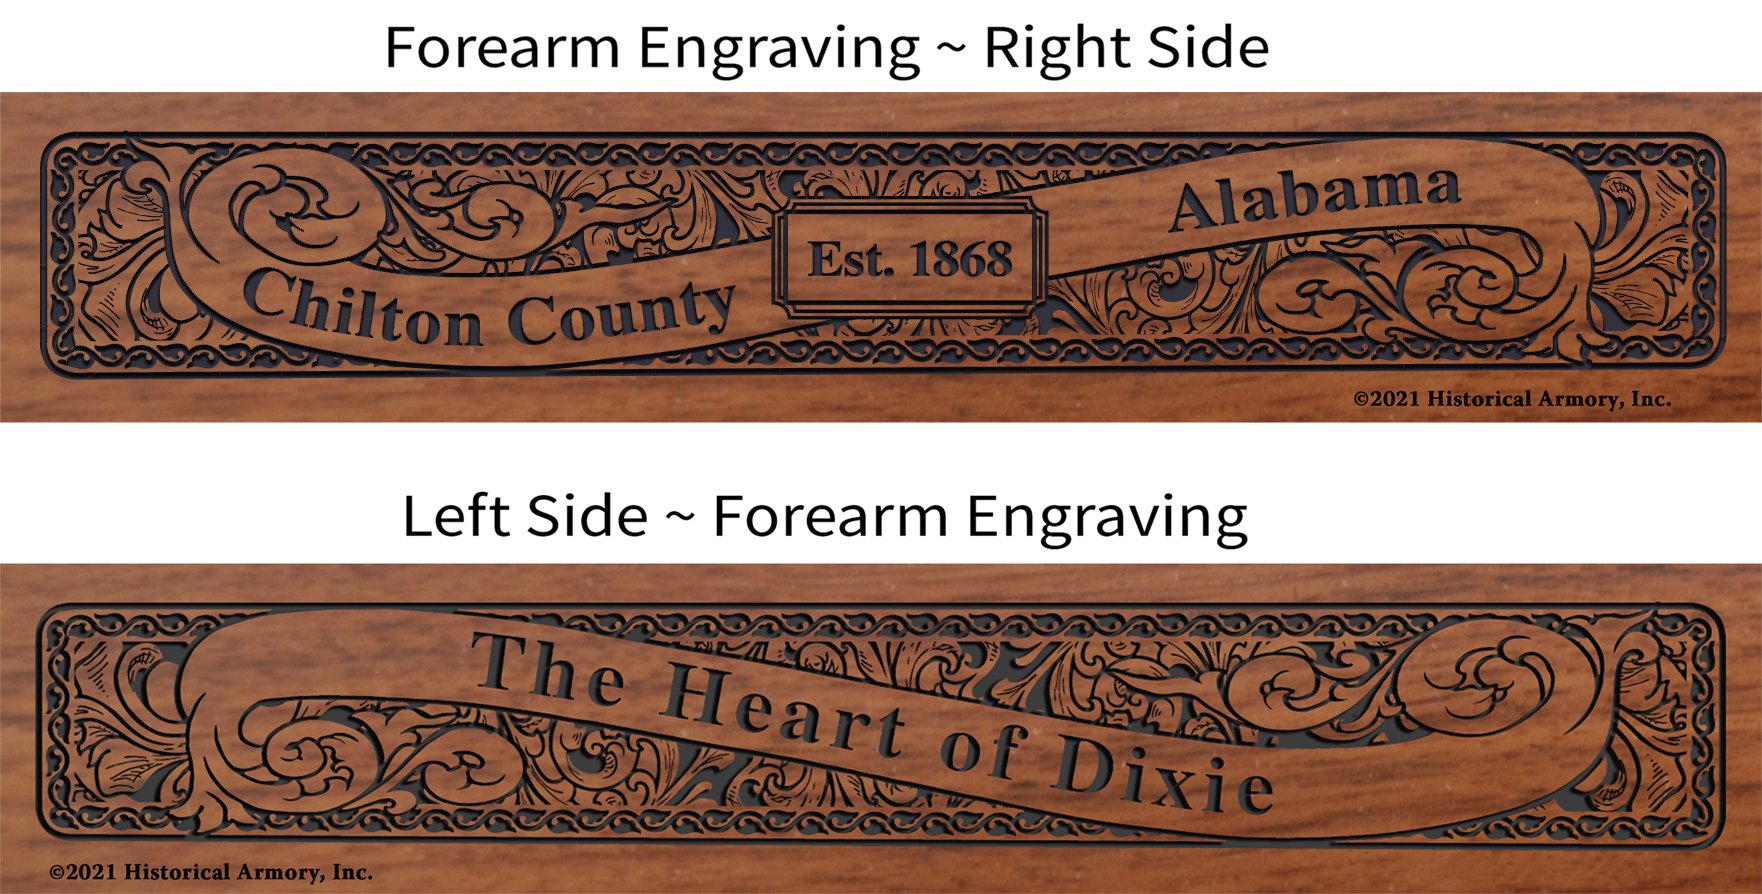 Chilton County Alabama Establishment and Motto History Engraved Rifle Forearm